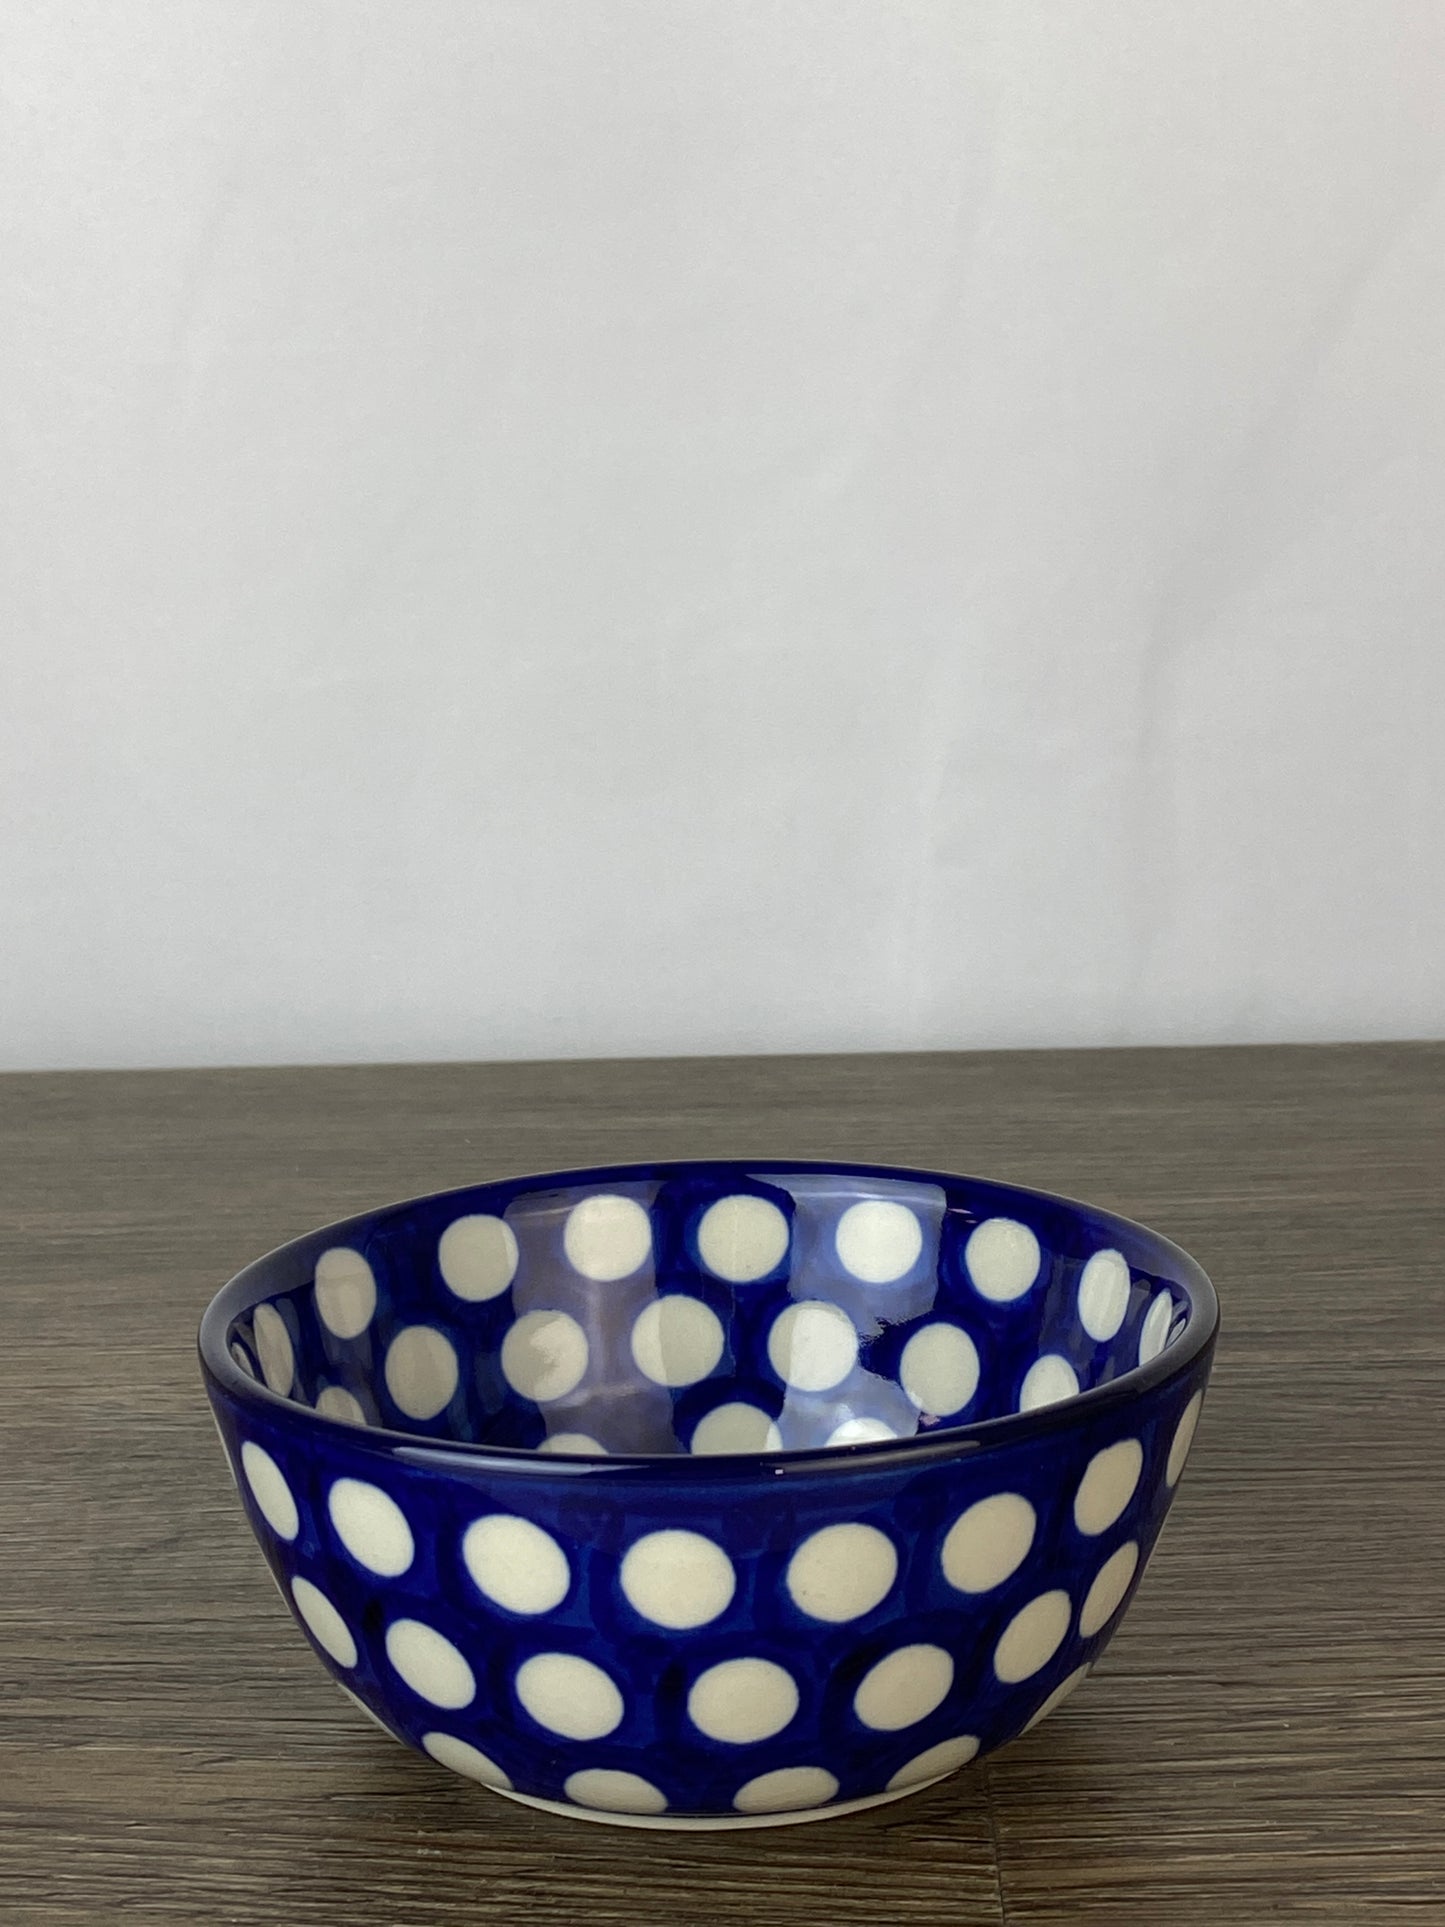 SALE Small Cereal / Dessert Bowl - Shape 17 - Pattern 2728